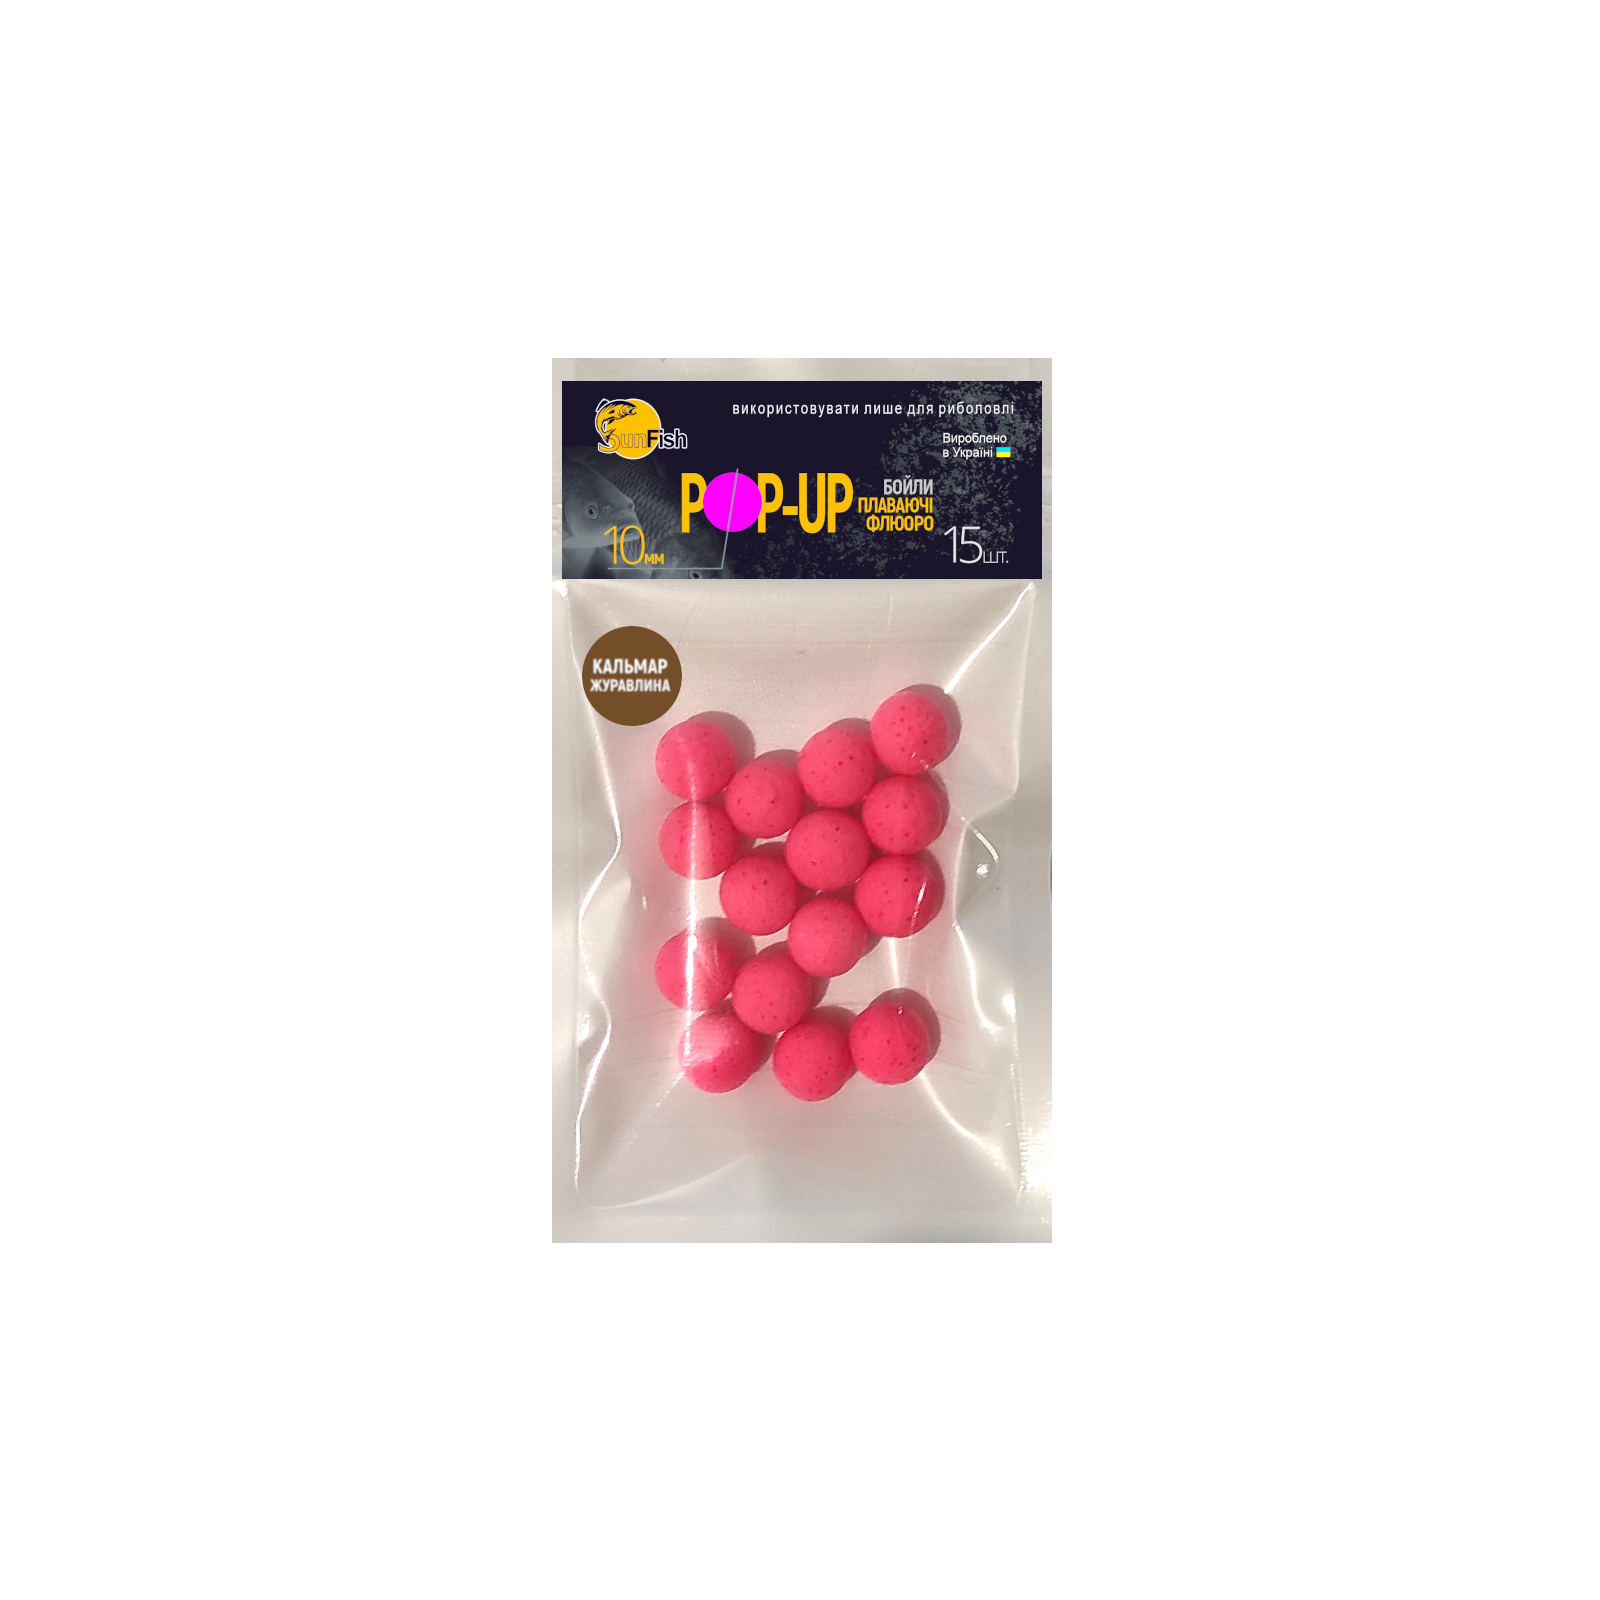 Бойл SunFish Pop-Up Кальмар Журавлина 10 mm 15 шт (SF201688)